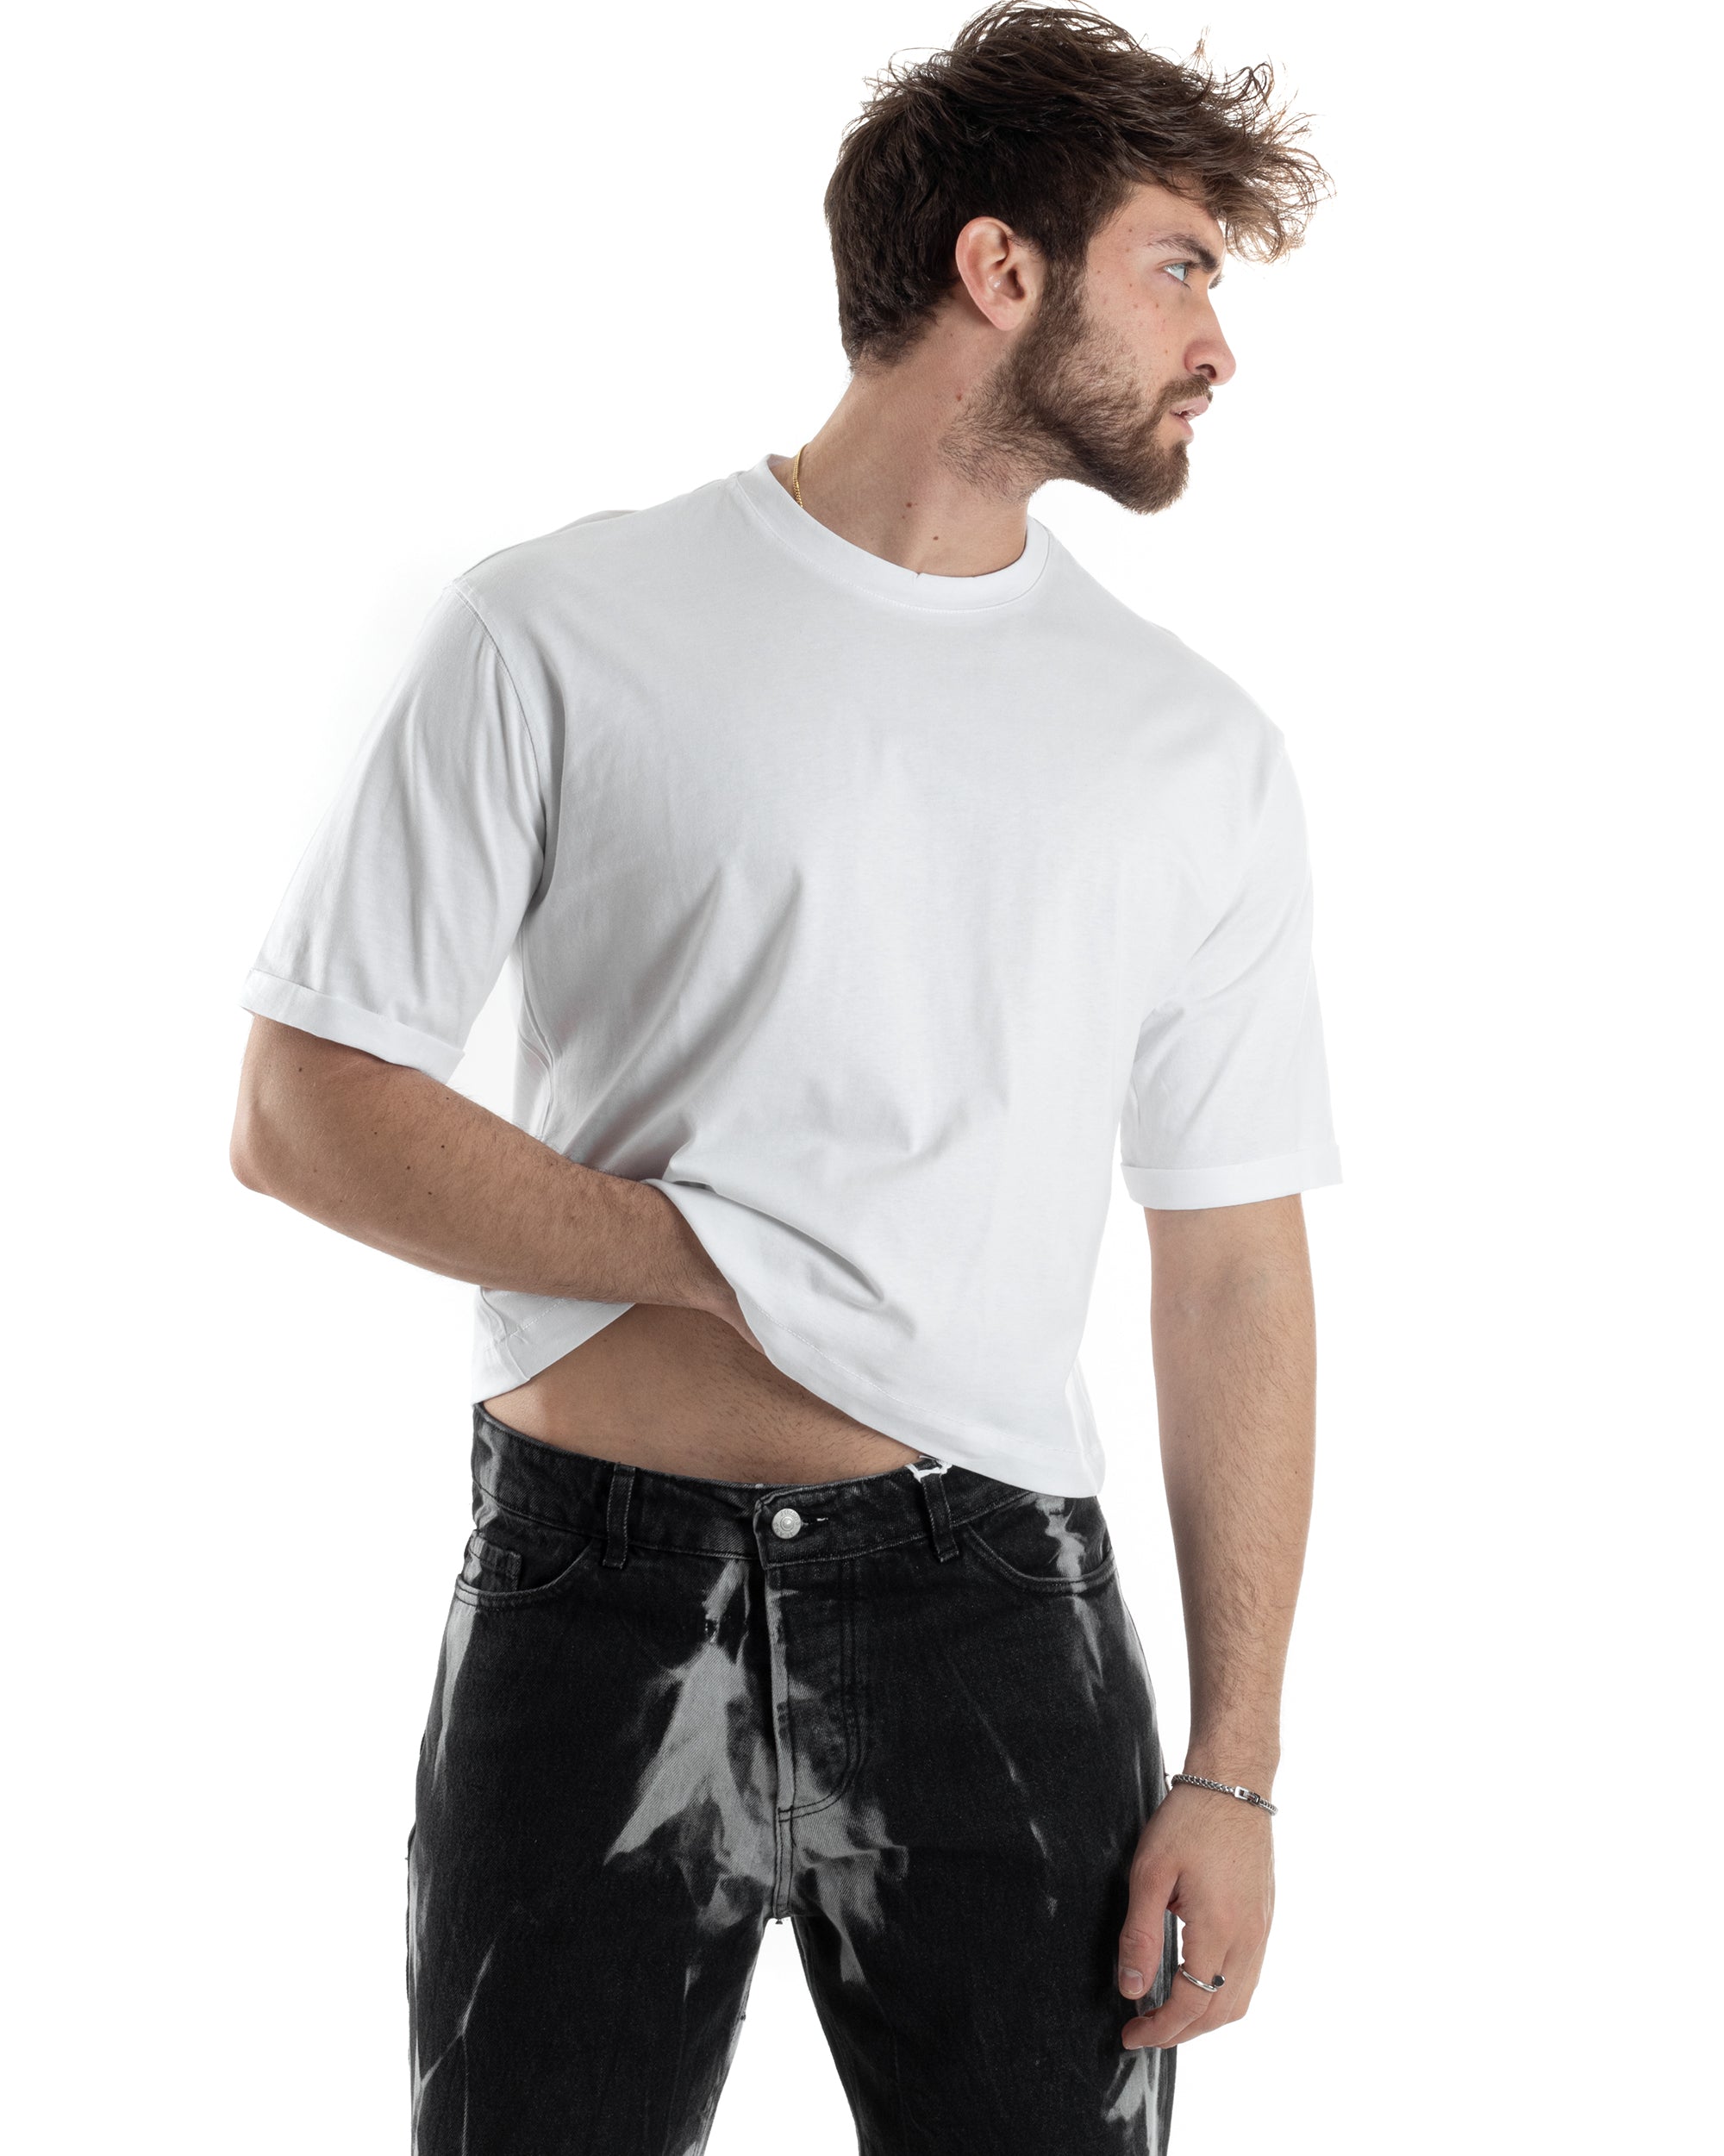 T-shirt Uomo Cropped Corta Boxy Fit Tinta Unita Bianco Casual GIOSAL-TS3004A